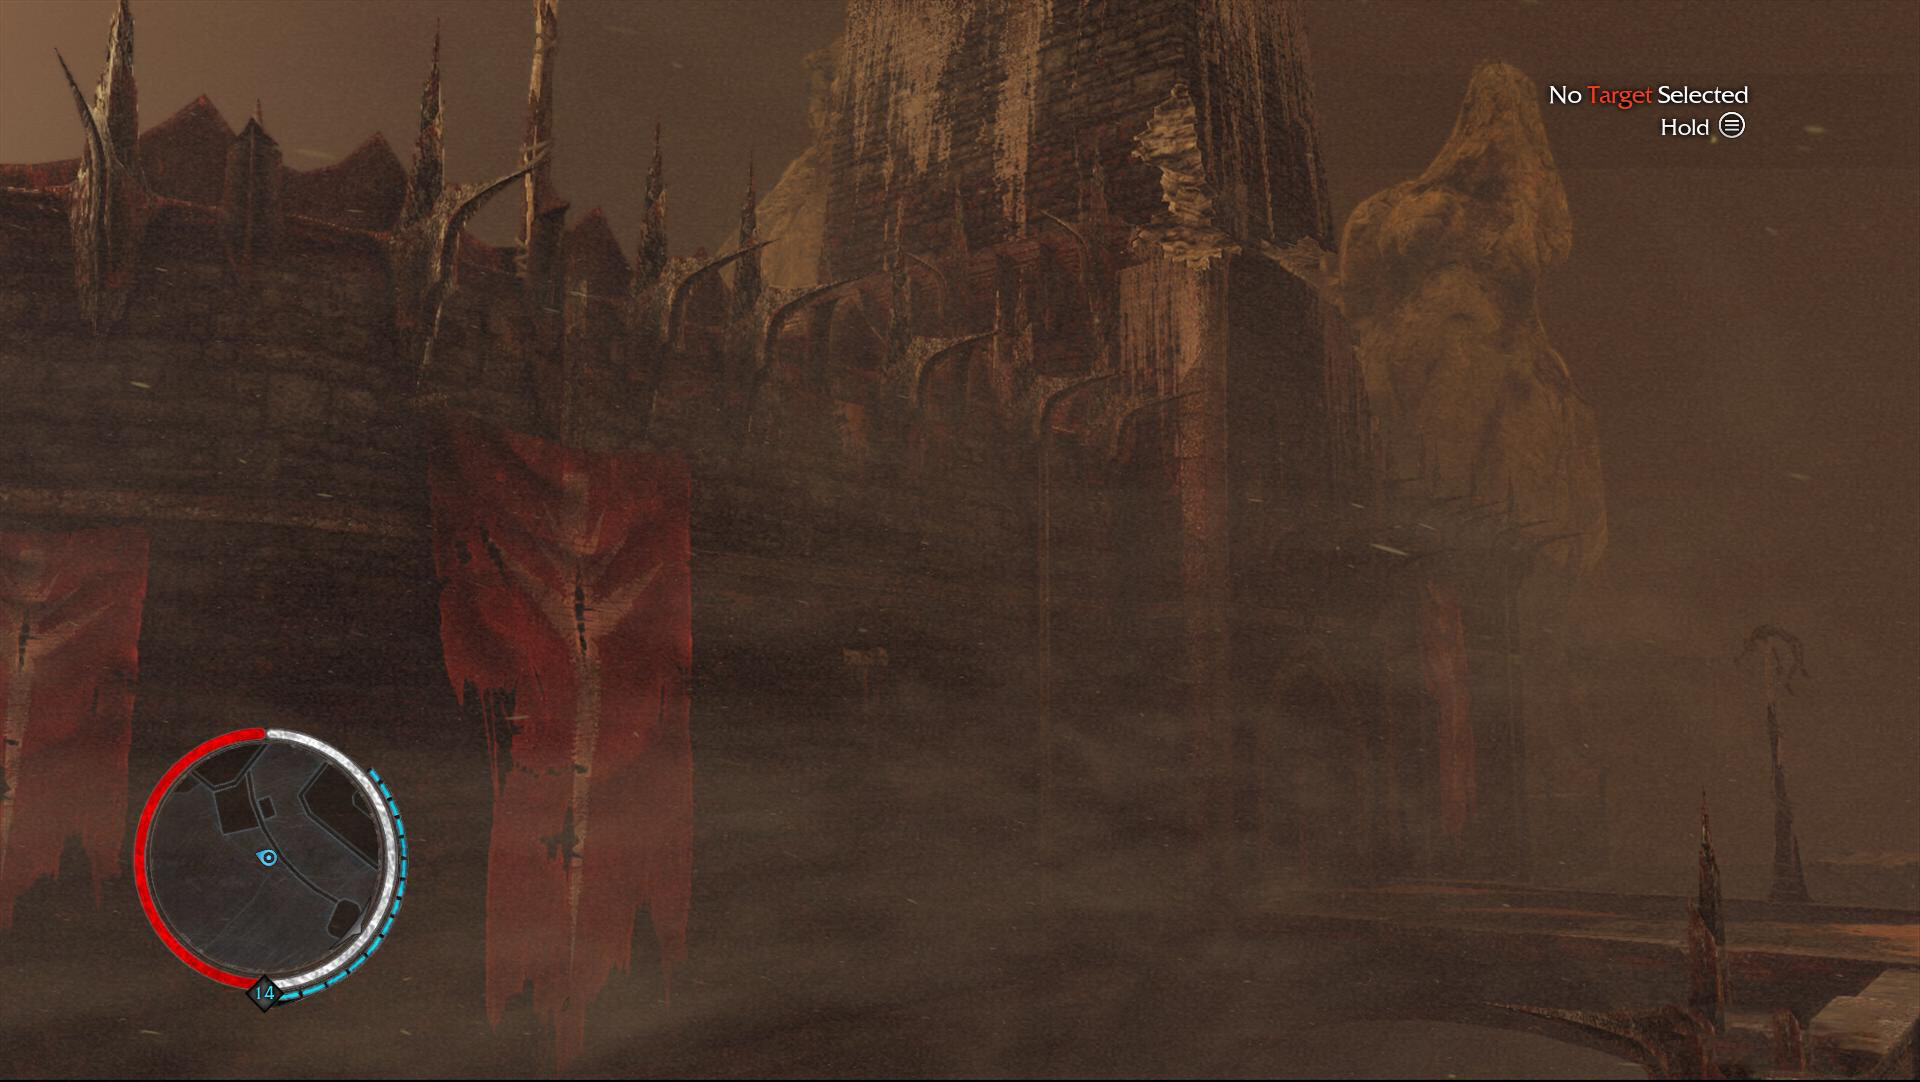 ArtStation - Monolith Studios: Middle-earth: Shadow of Mordor